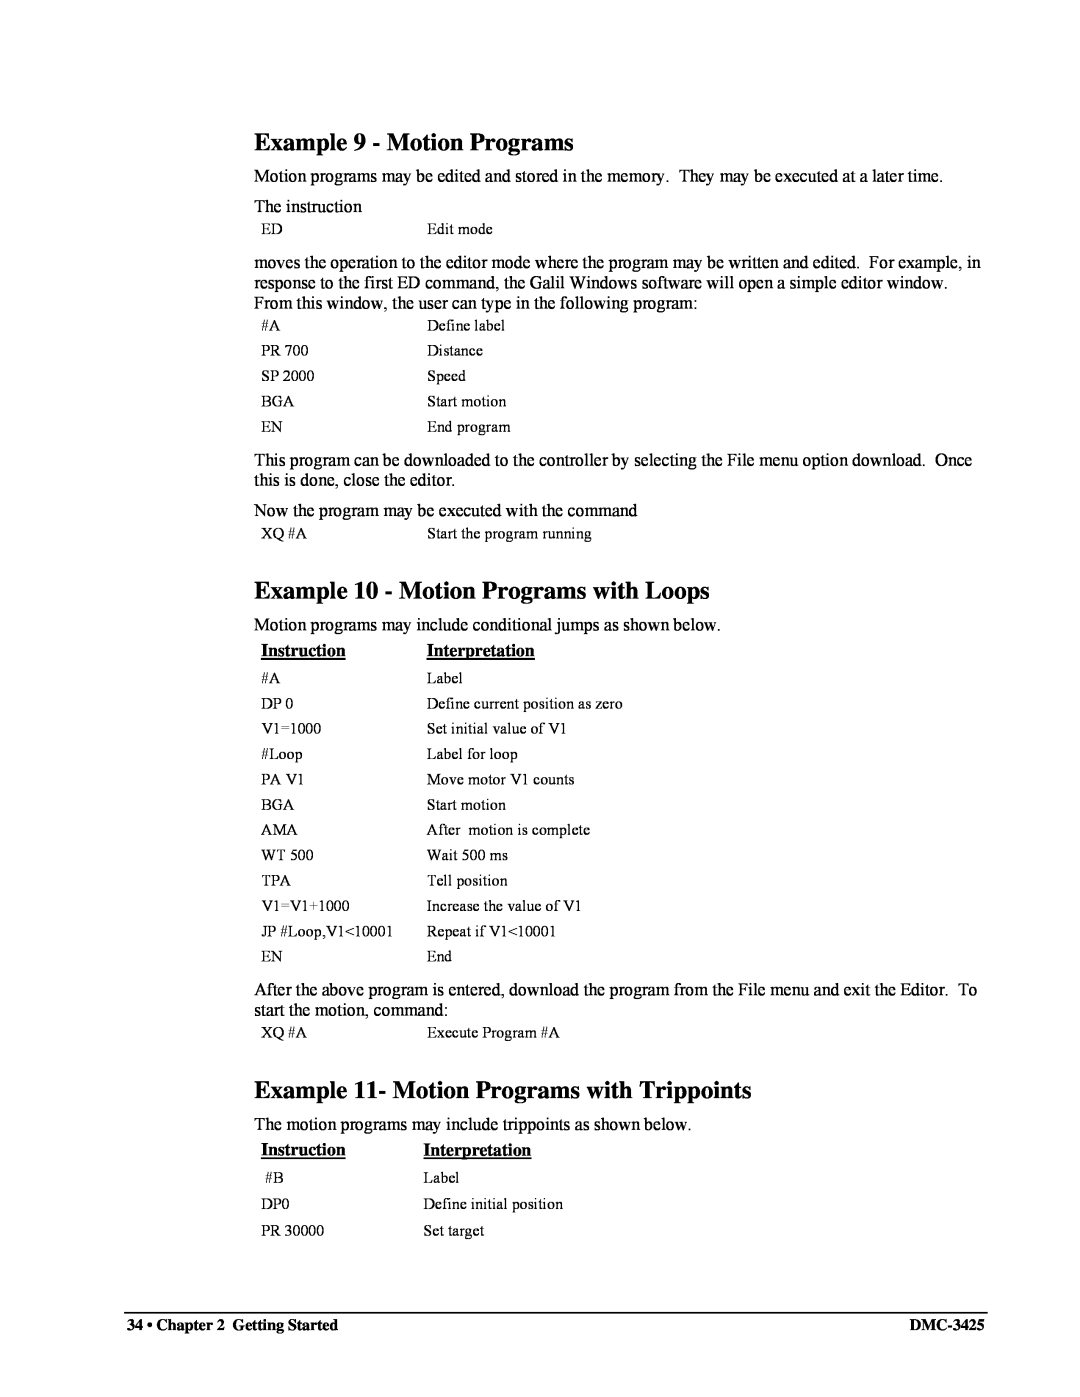 Galil DMC-3425 user manual Example 9 - Motion Programs, Example 10 - Motion Programs with Loops 